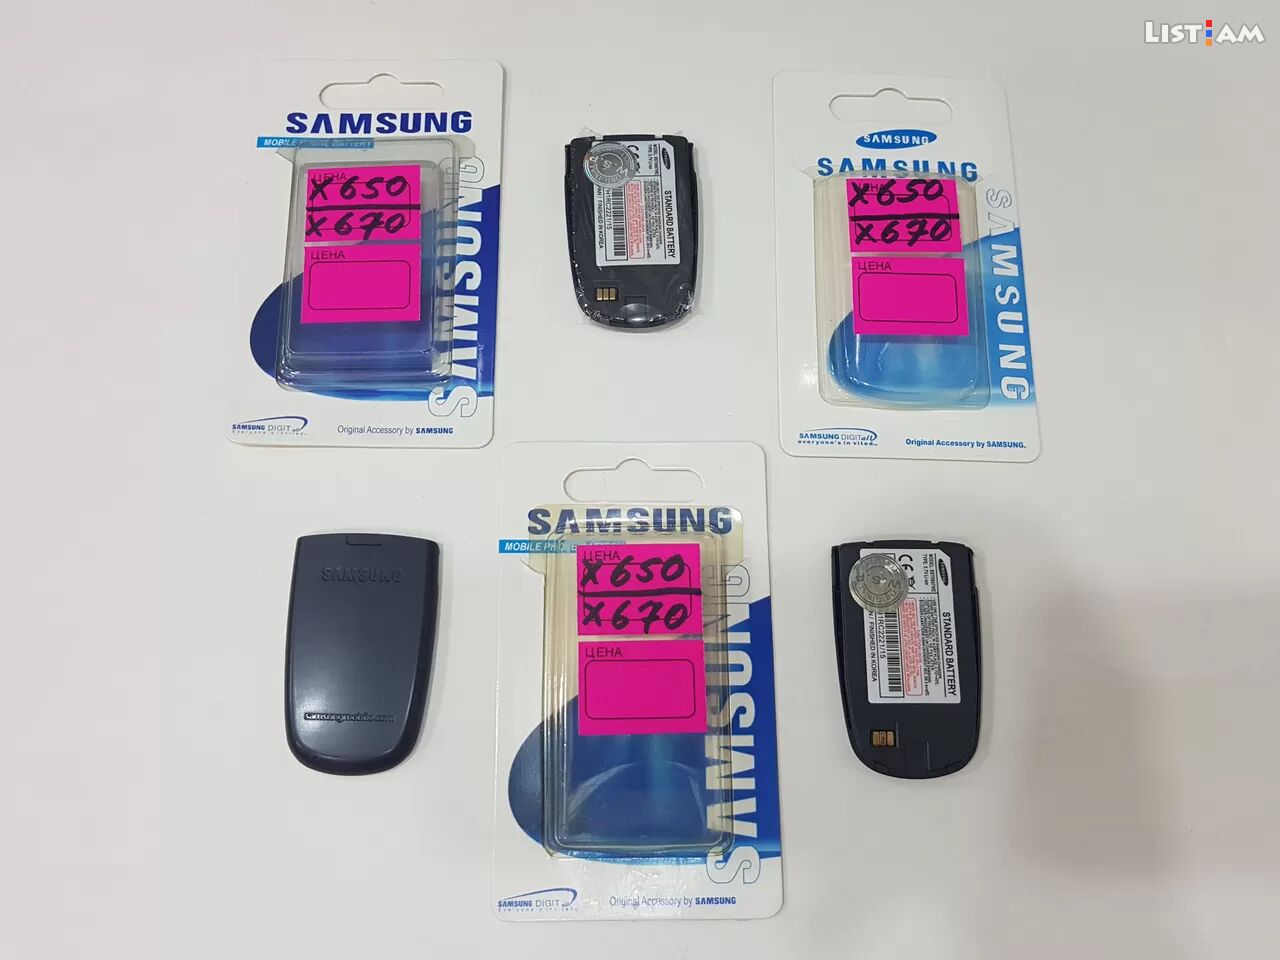 Samsung x660 battery